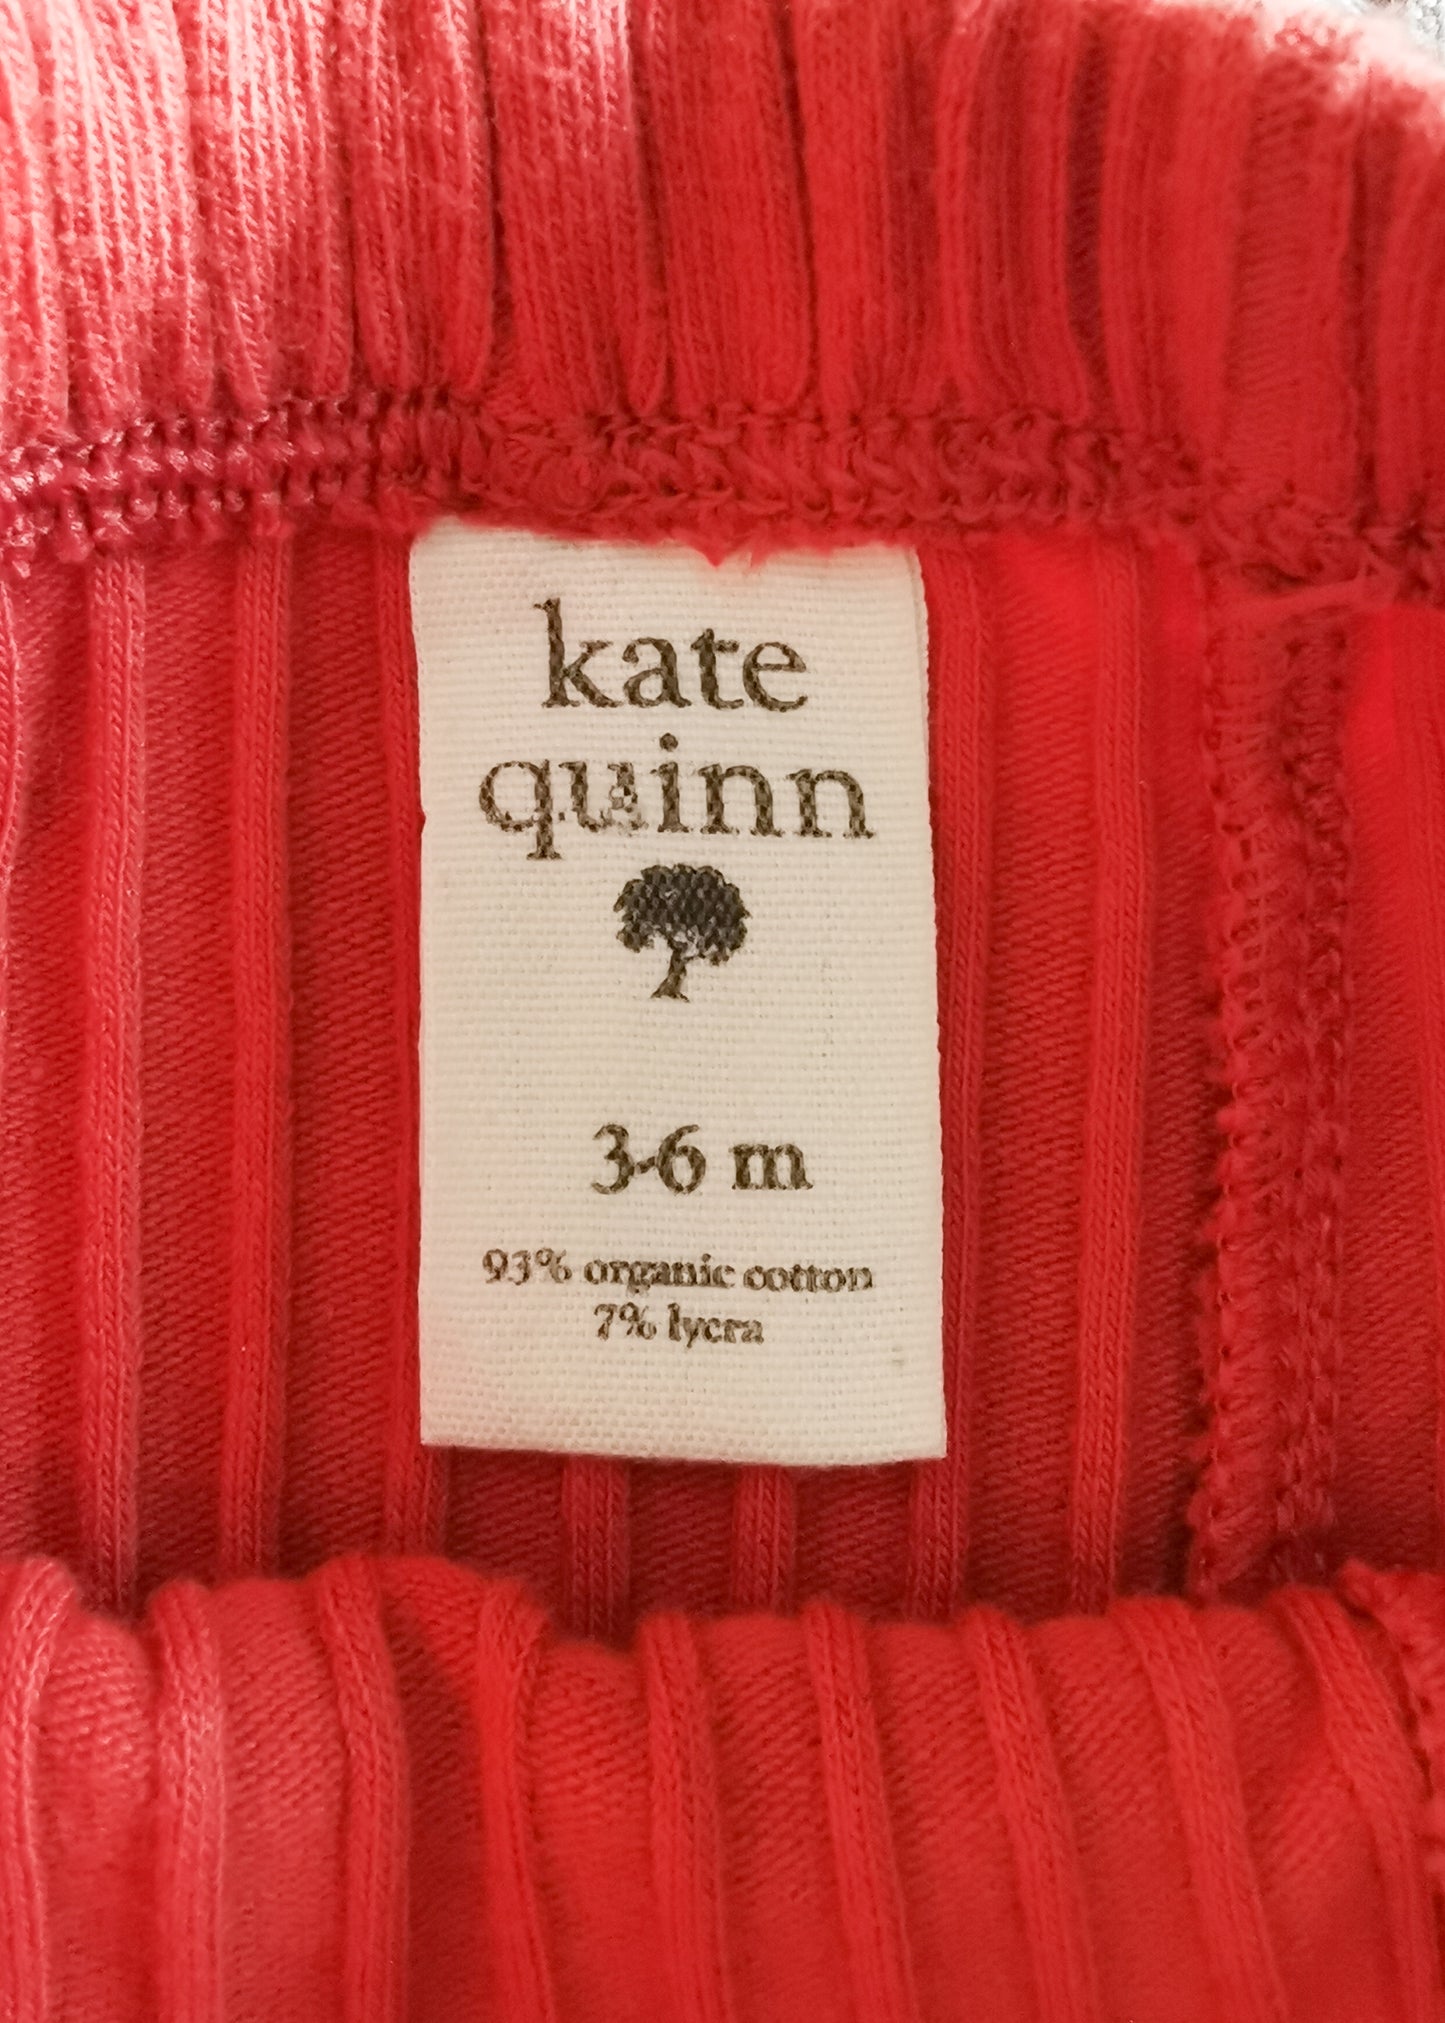 Kate Quinn Organic Cotton Pants (3-6m)